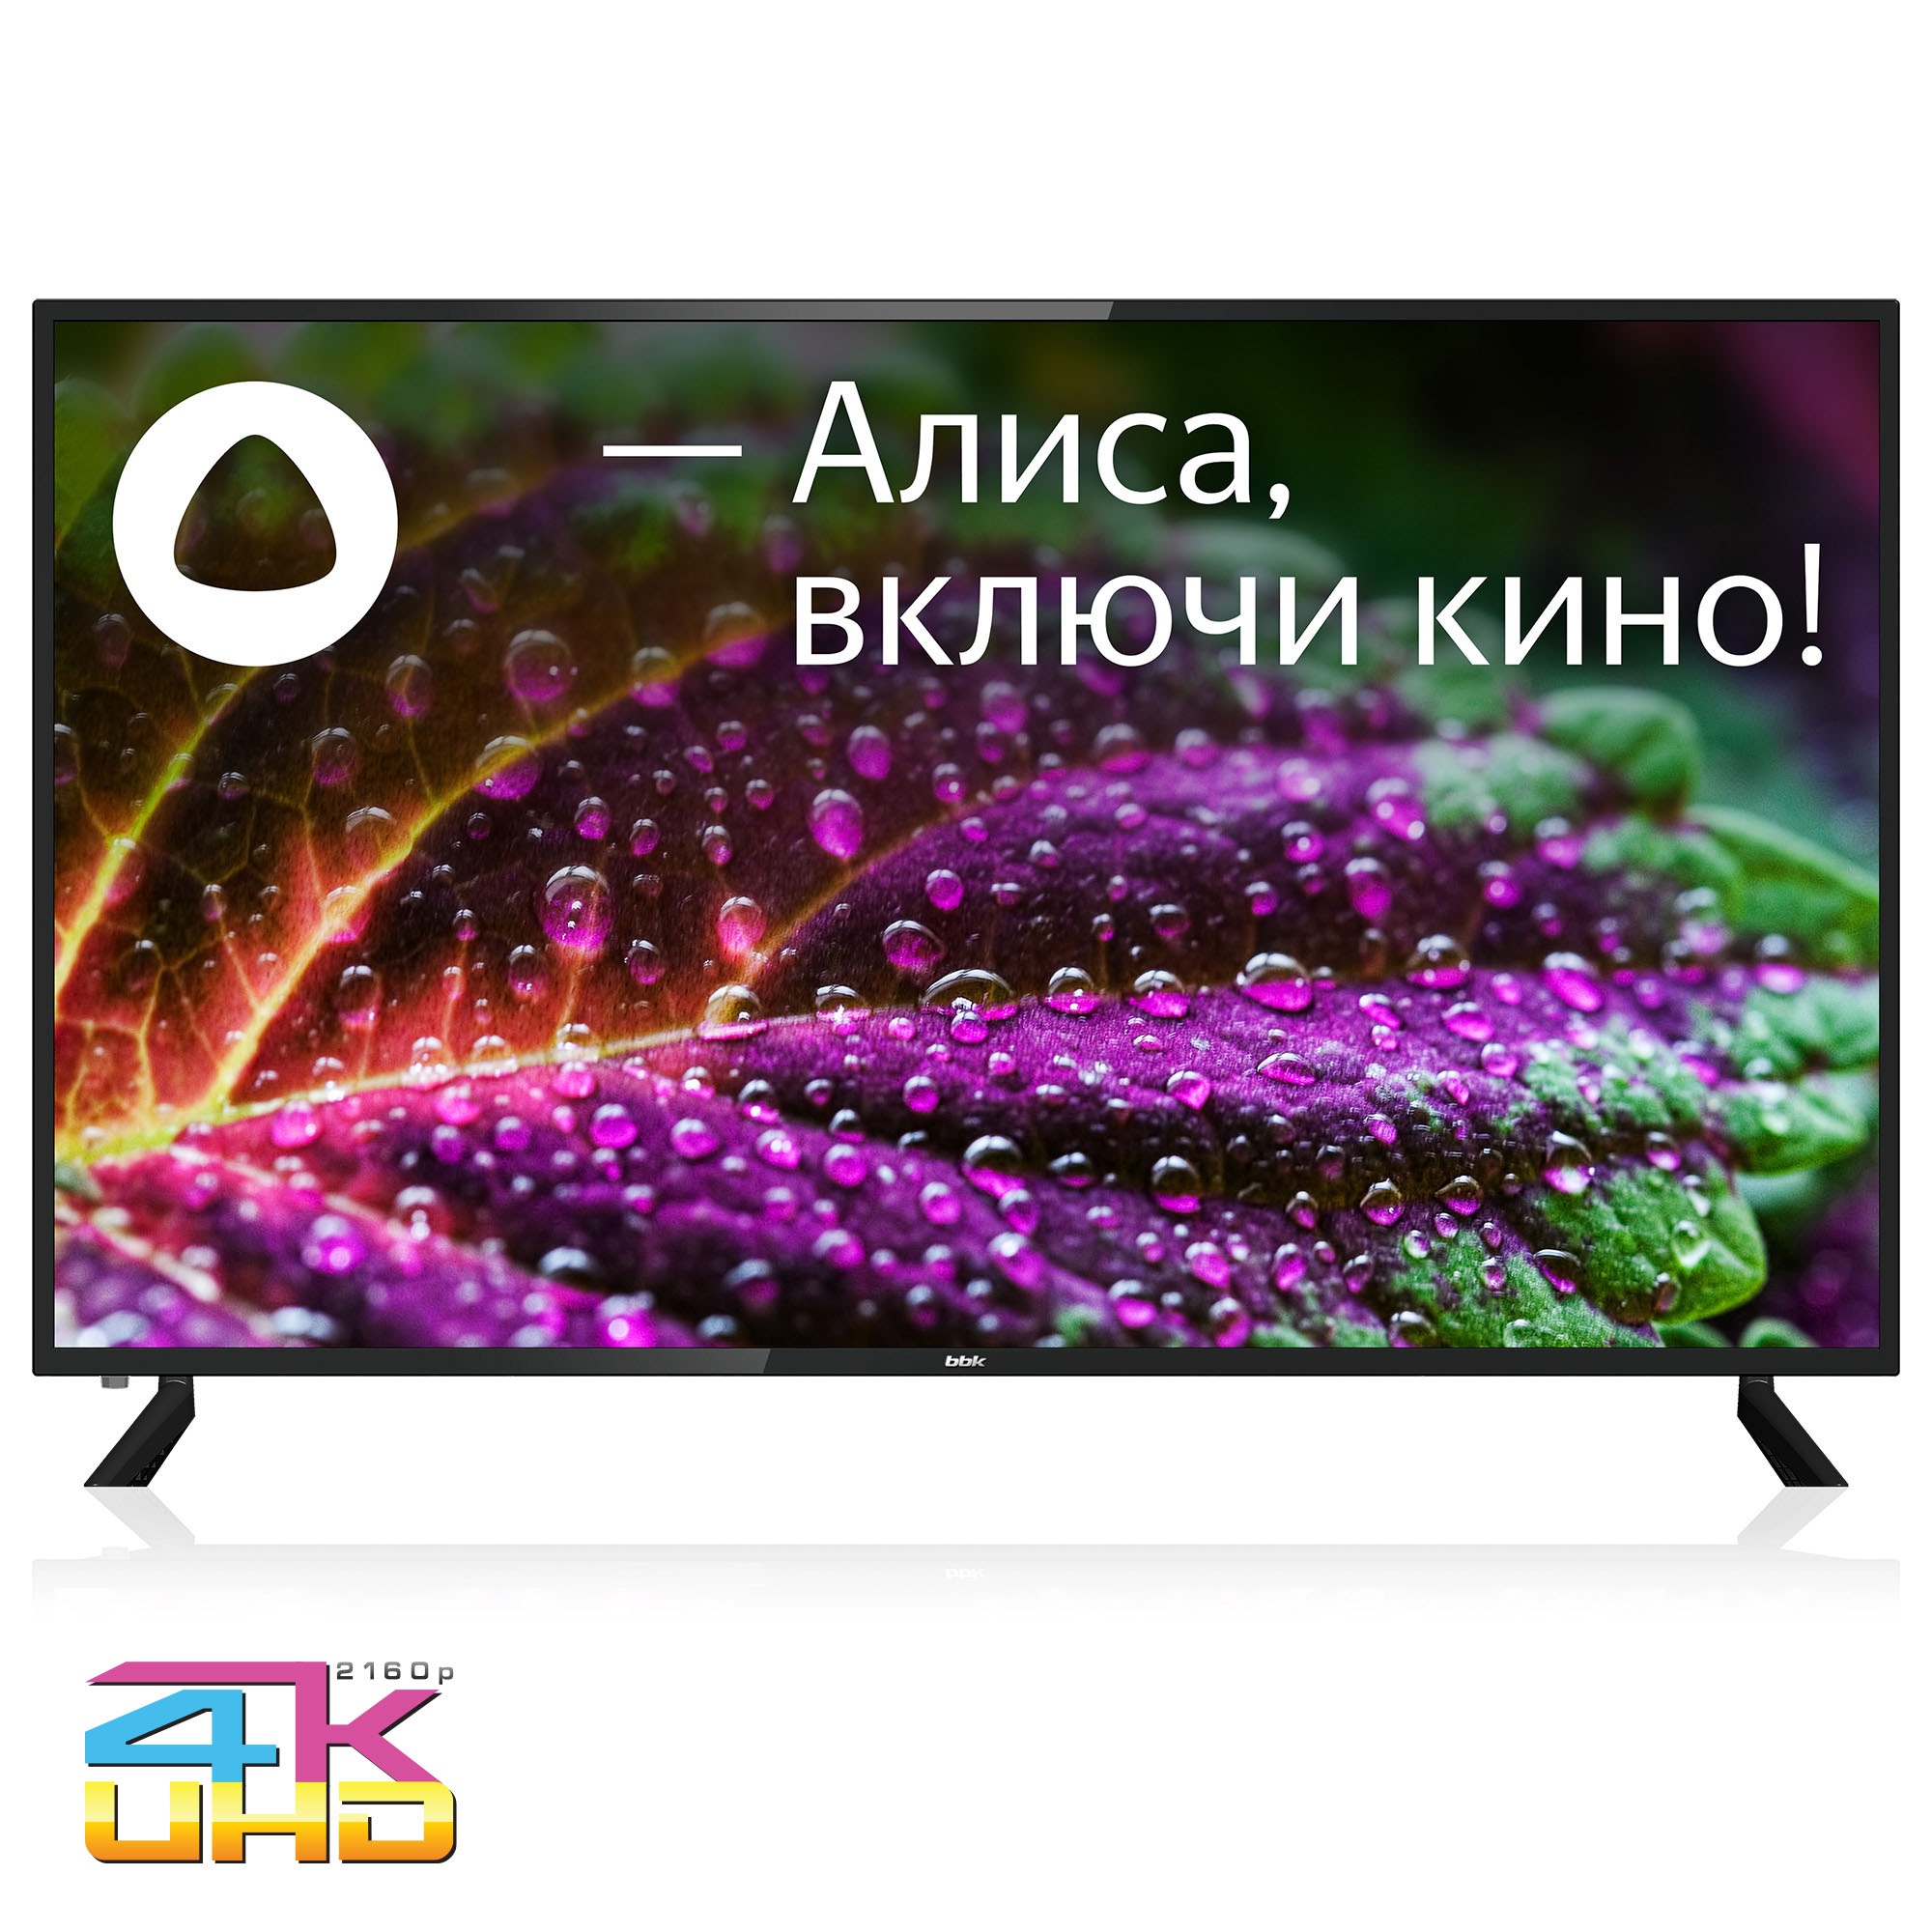 Телевизор BBK 65LED-9201/UTS2C Яндекс.ТВ черный телевизор oled digma 65l qled android tv frameless черный серебристый 4k ultra hd 120hz hsr dvb t dvb t2 dvb c dvb s dvb s2 usb 2 0 wifi smart tv